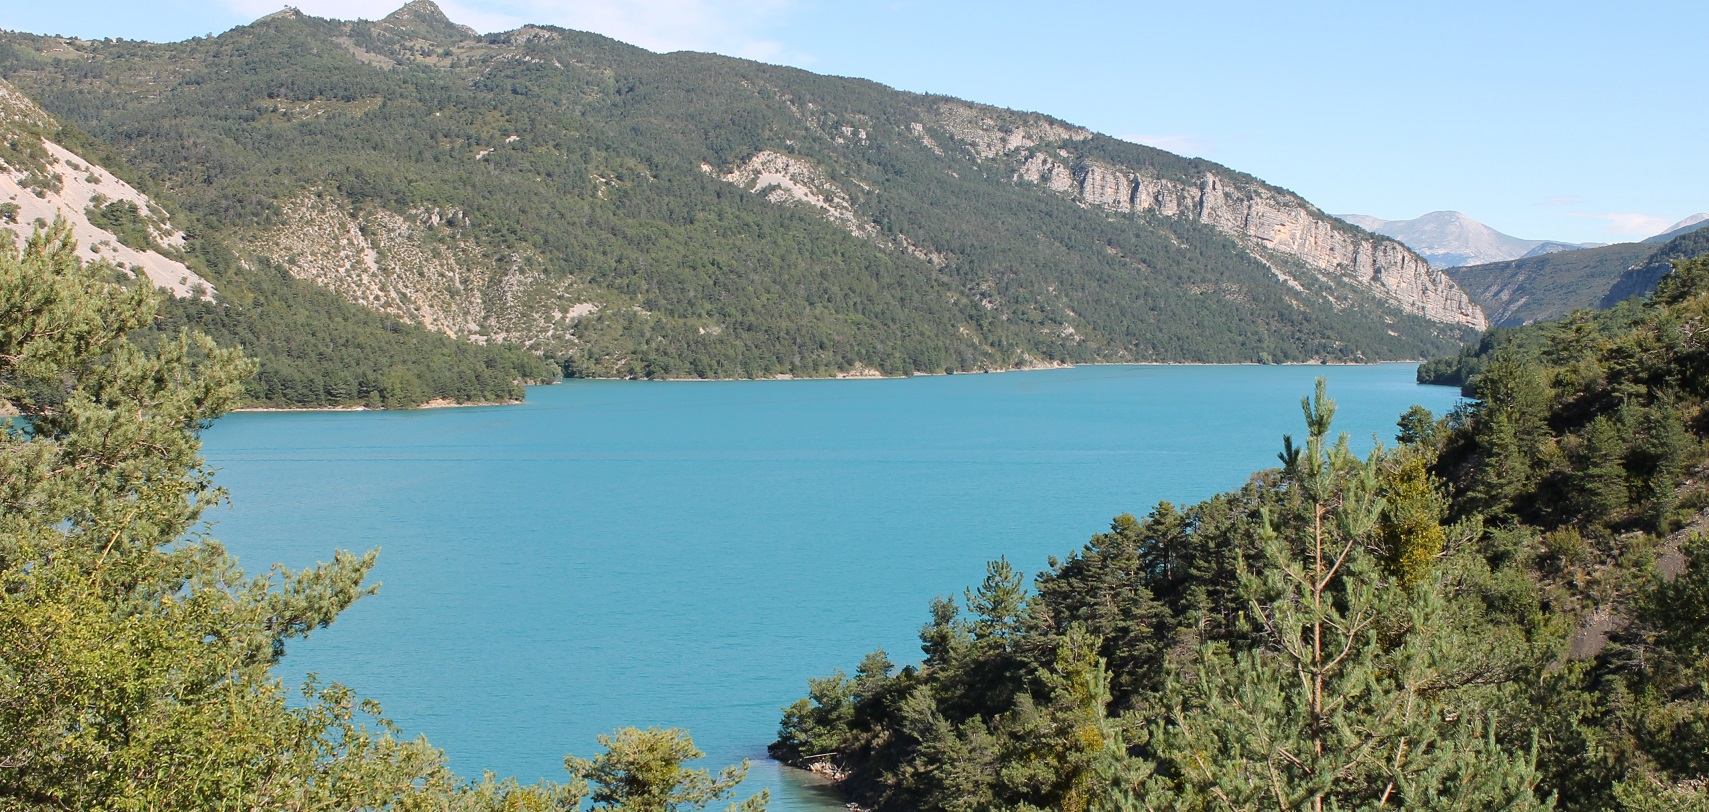 The Castillon lake